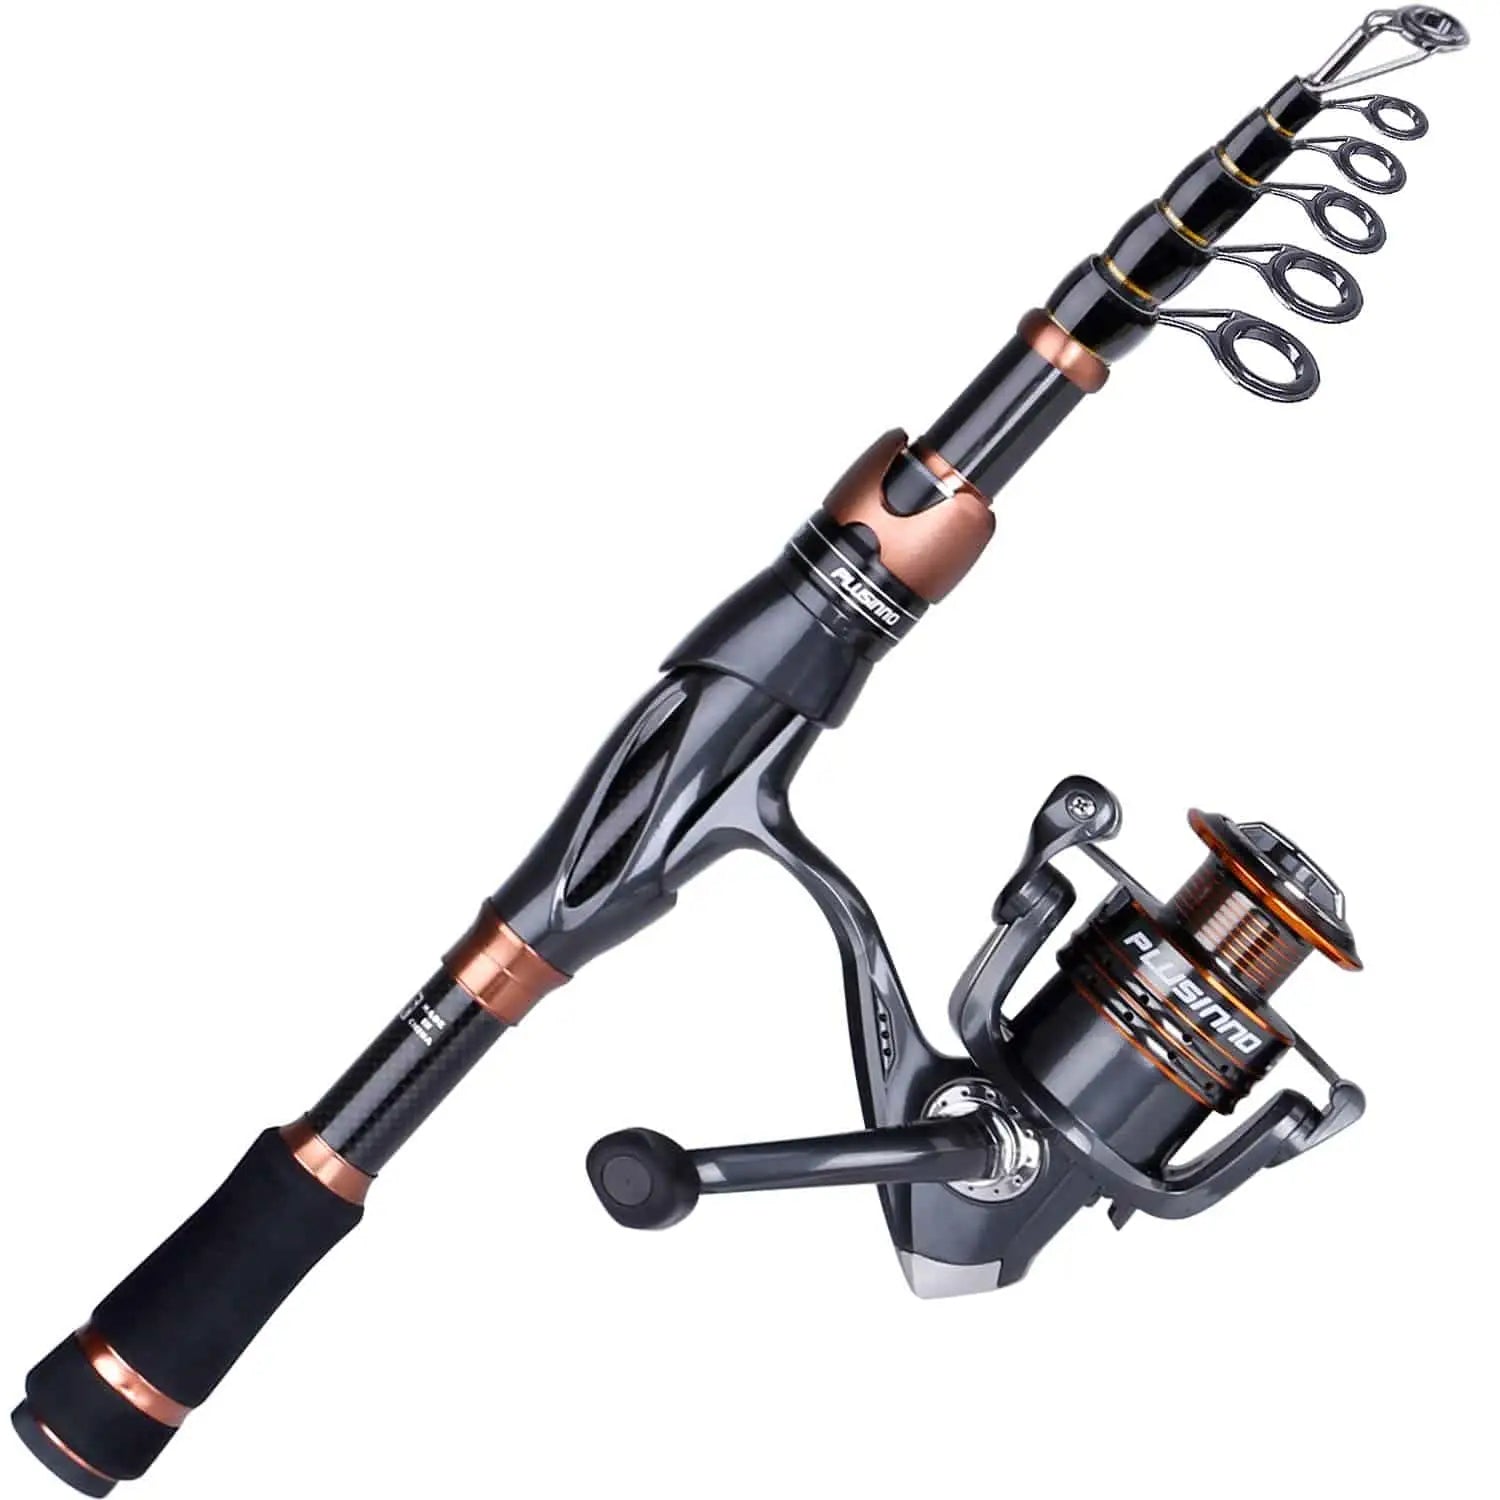 Adium Po et Collapsible Fishing Rod Reel Combo n Fishing Pole Kit